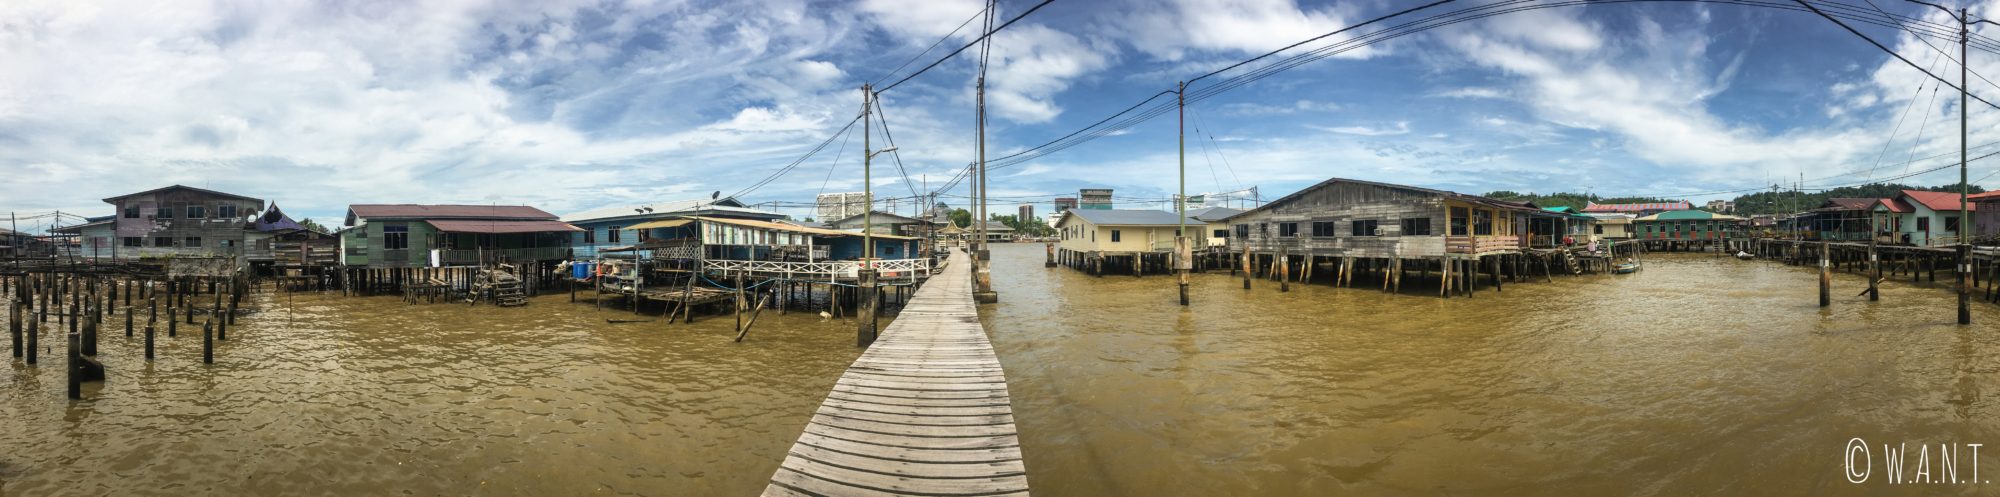 Panorama à l'intérieur du village flottant de Kampong Ayer à Bandar Seri Begawan